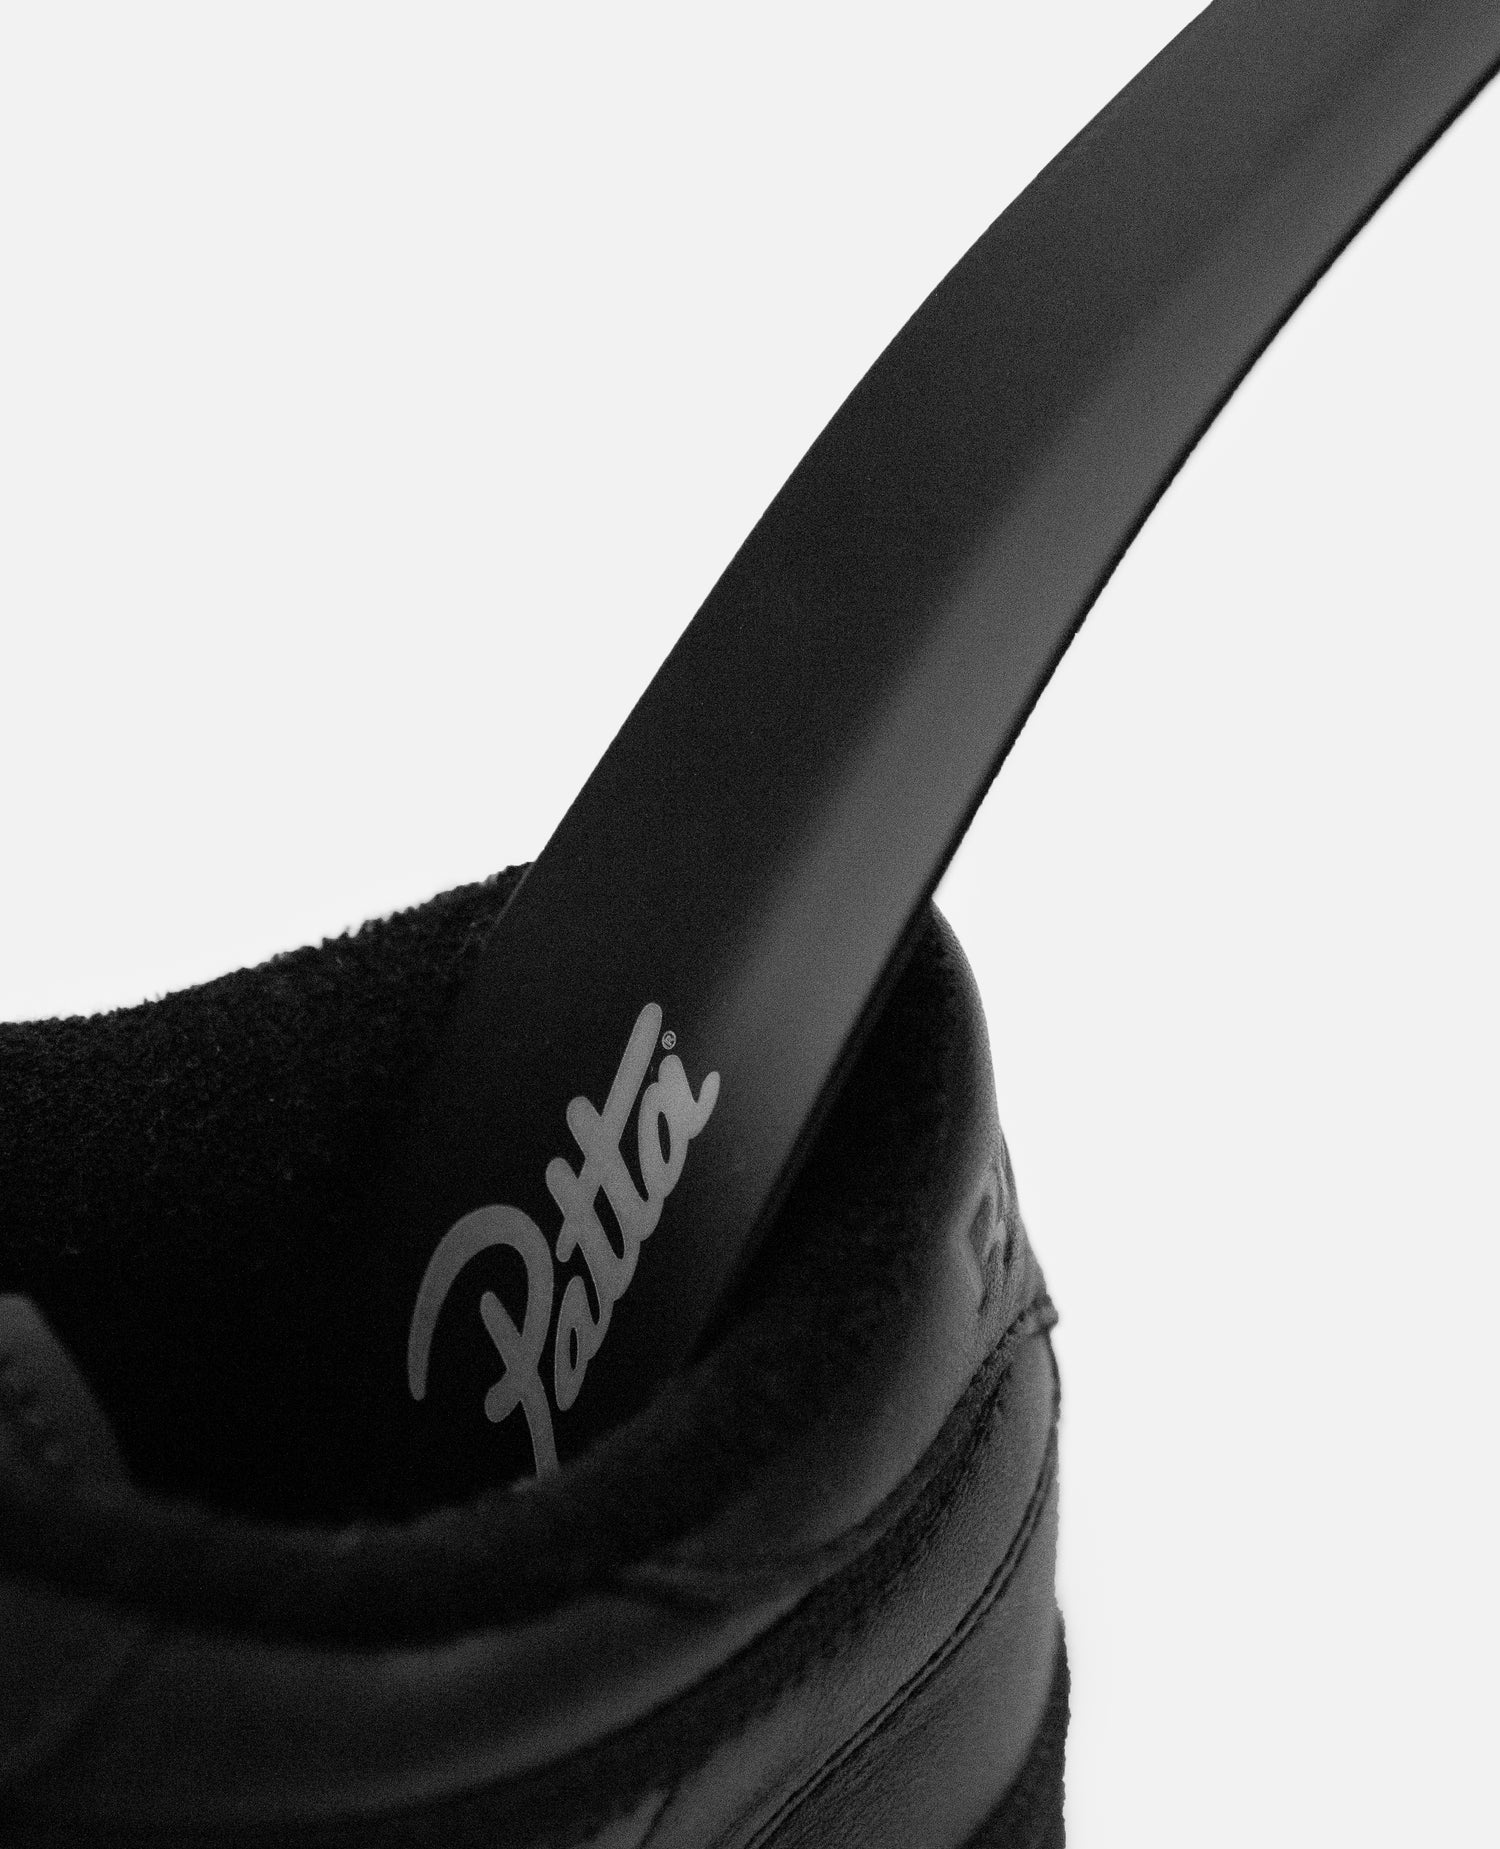 Patta Logo Shoe Horn (Black)